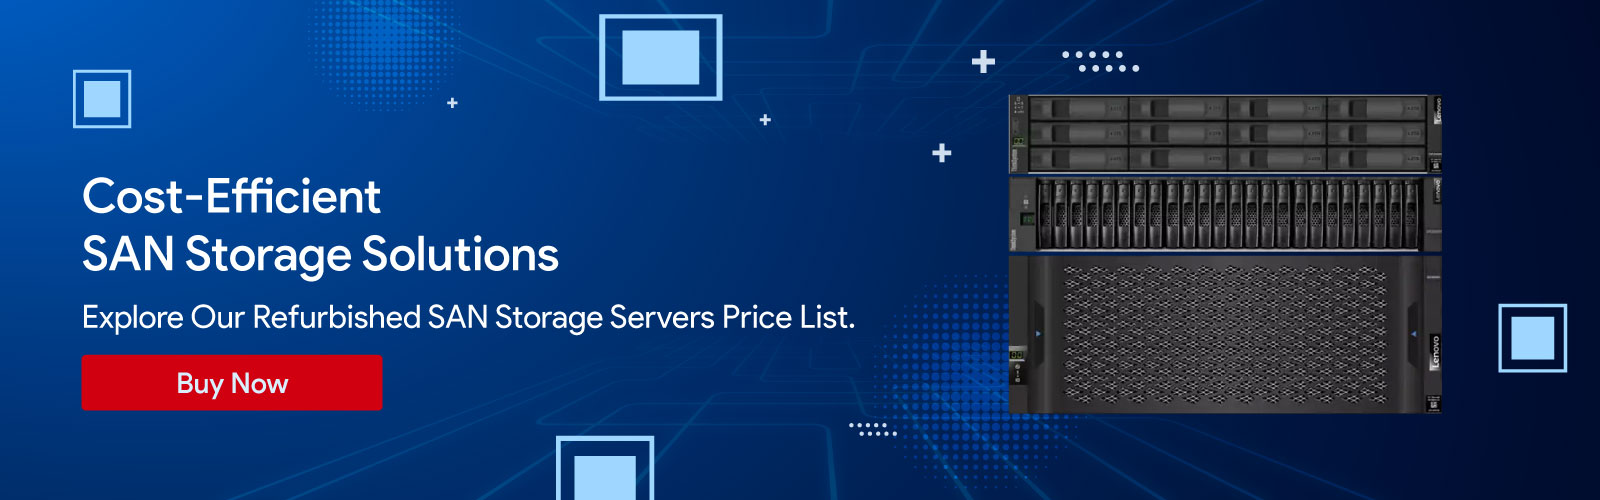 Refurbished-SAN-Storage-Servers-Price-list